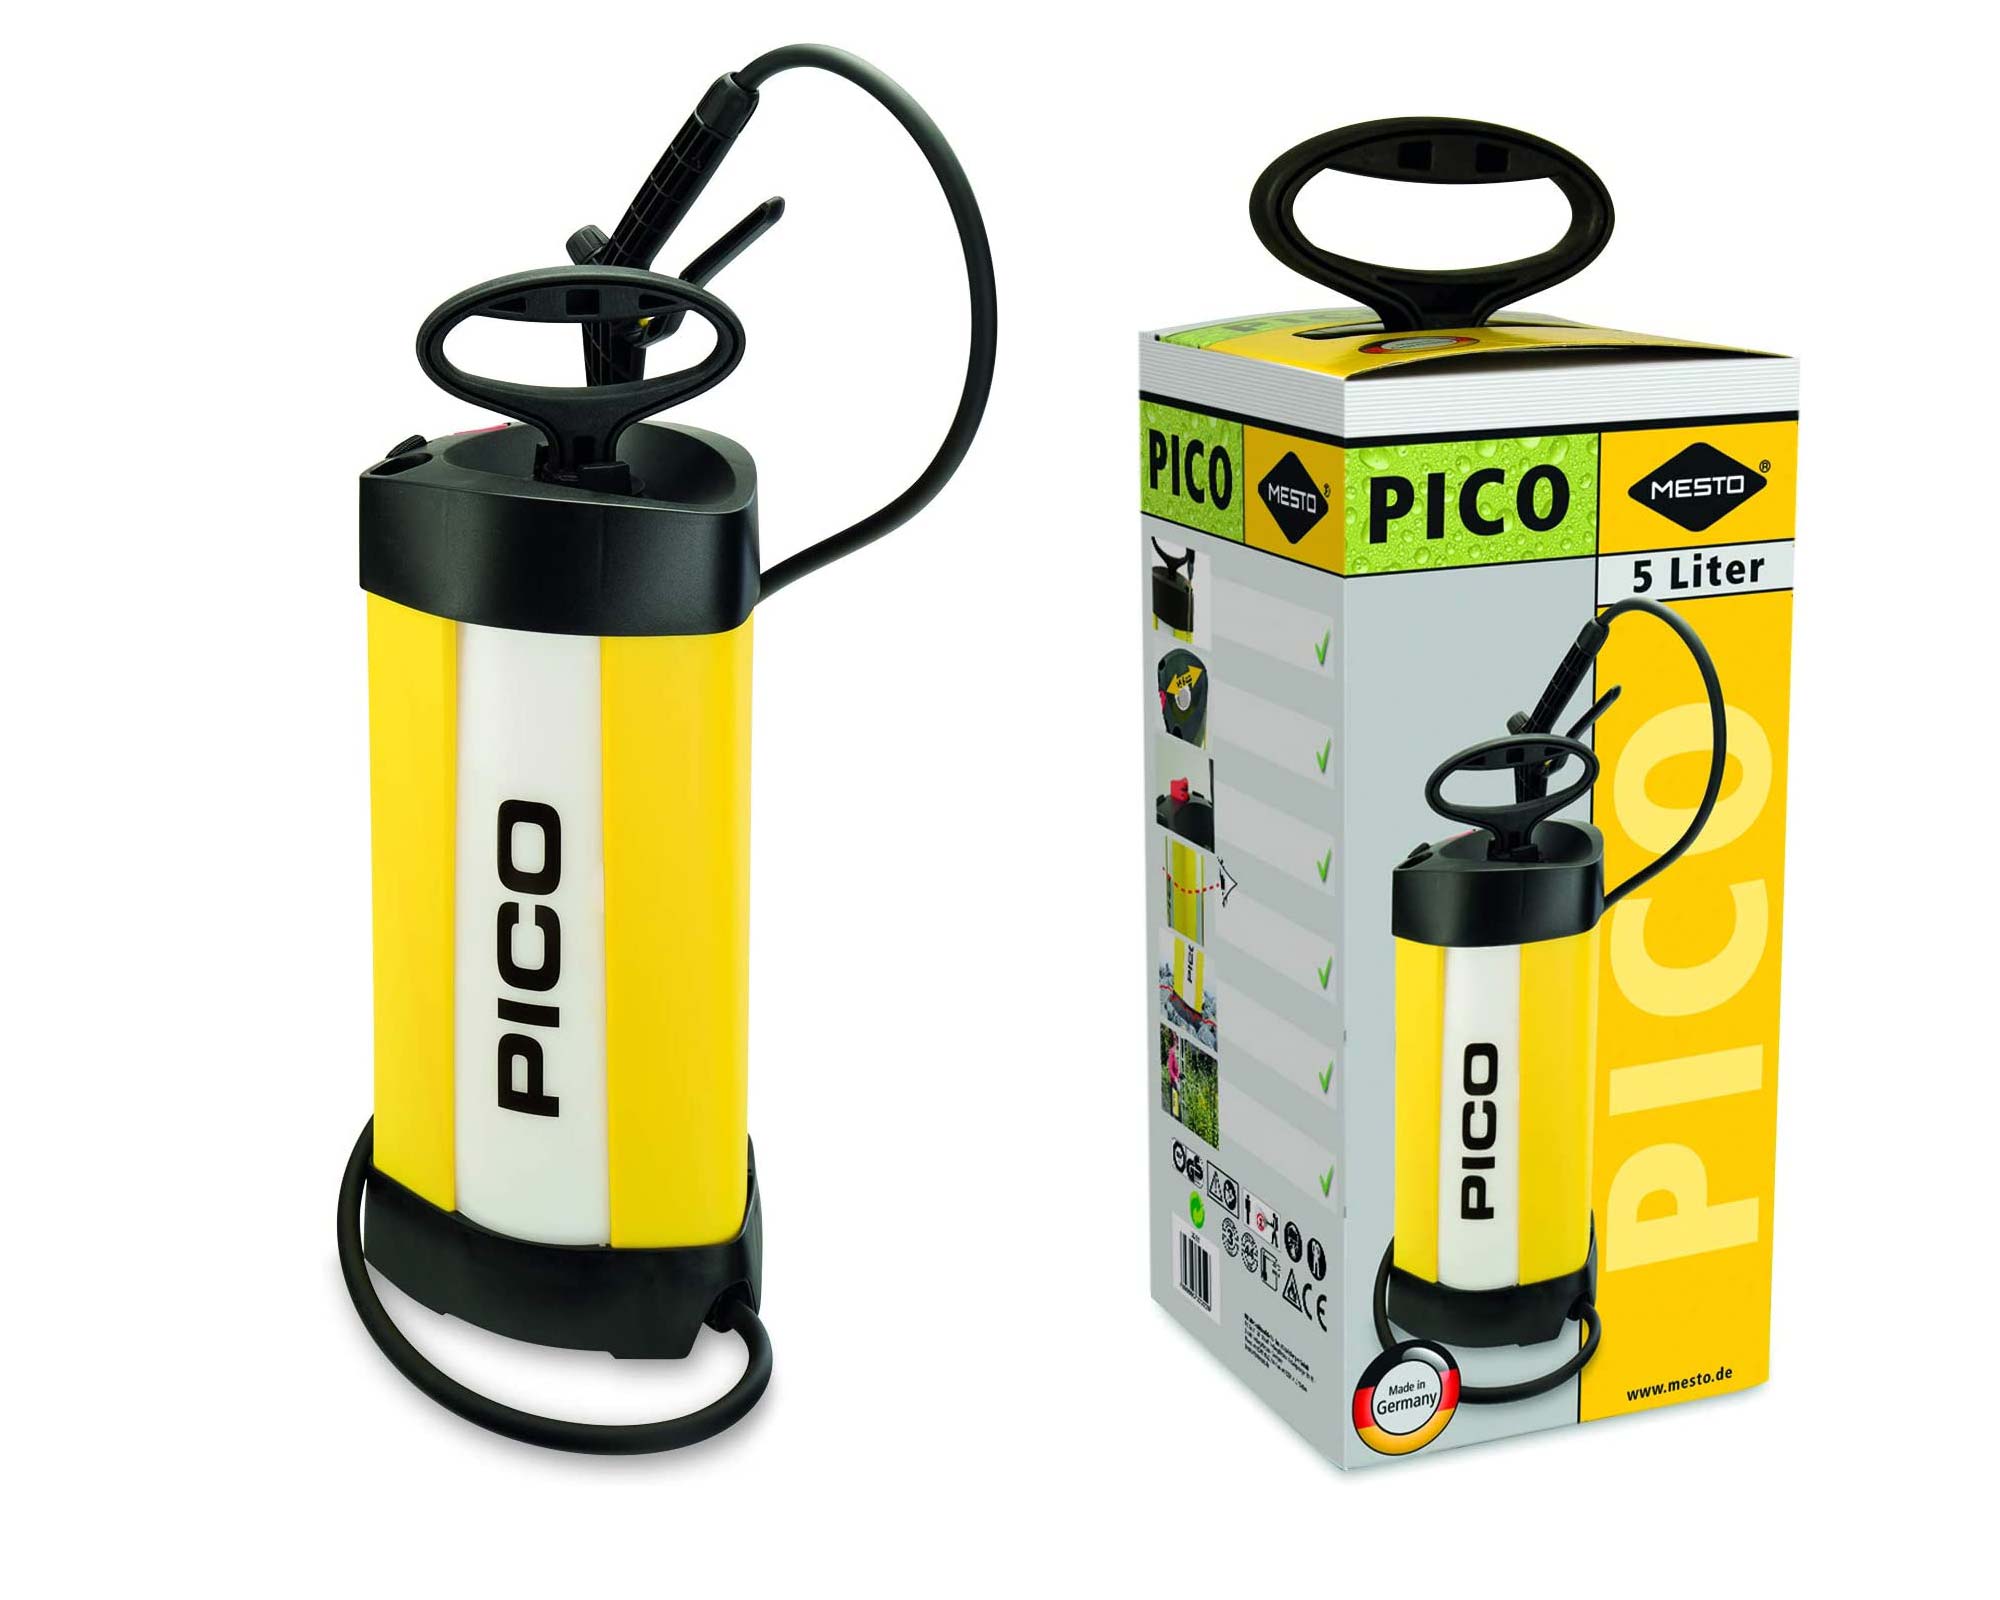 Pico 5l garden sprayer by Mesto of Germany